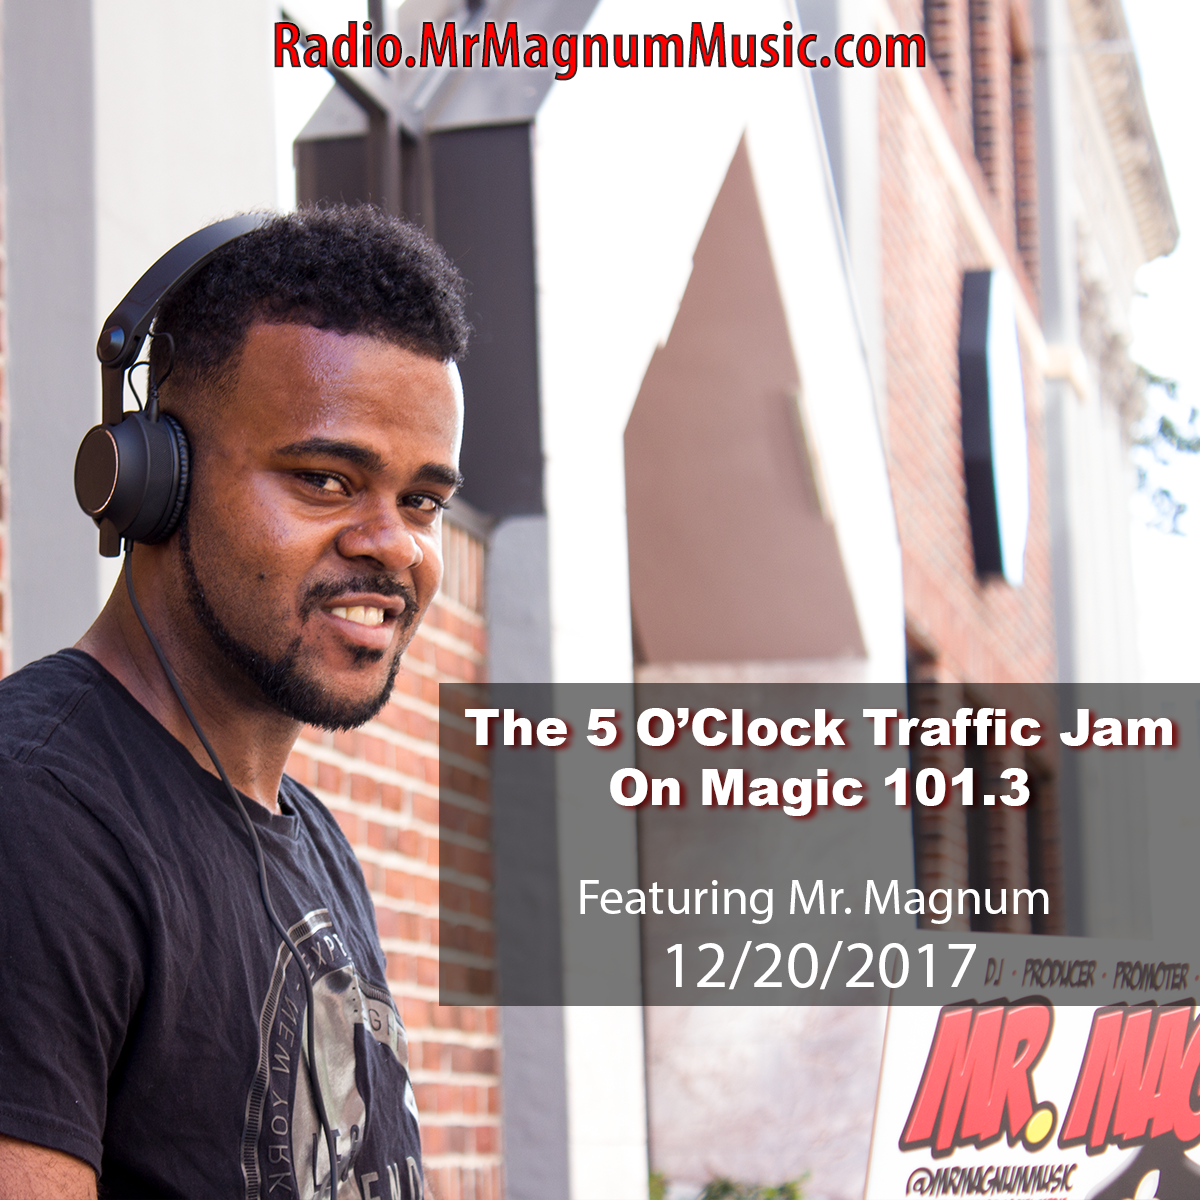 The 5 O'Clock Traffic Jam 20171220 featuring Gainesville's #1 DJ, Mr. Magnum on Magic 101.3